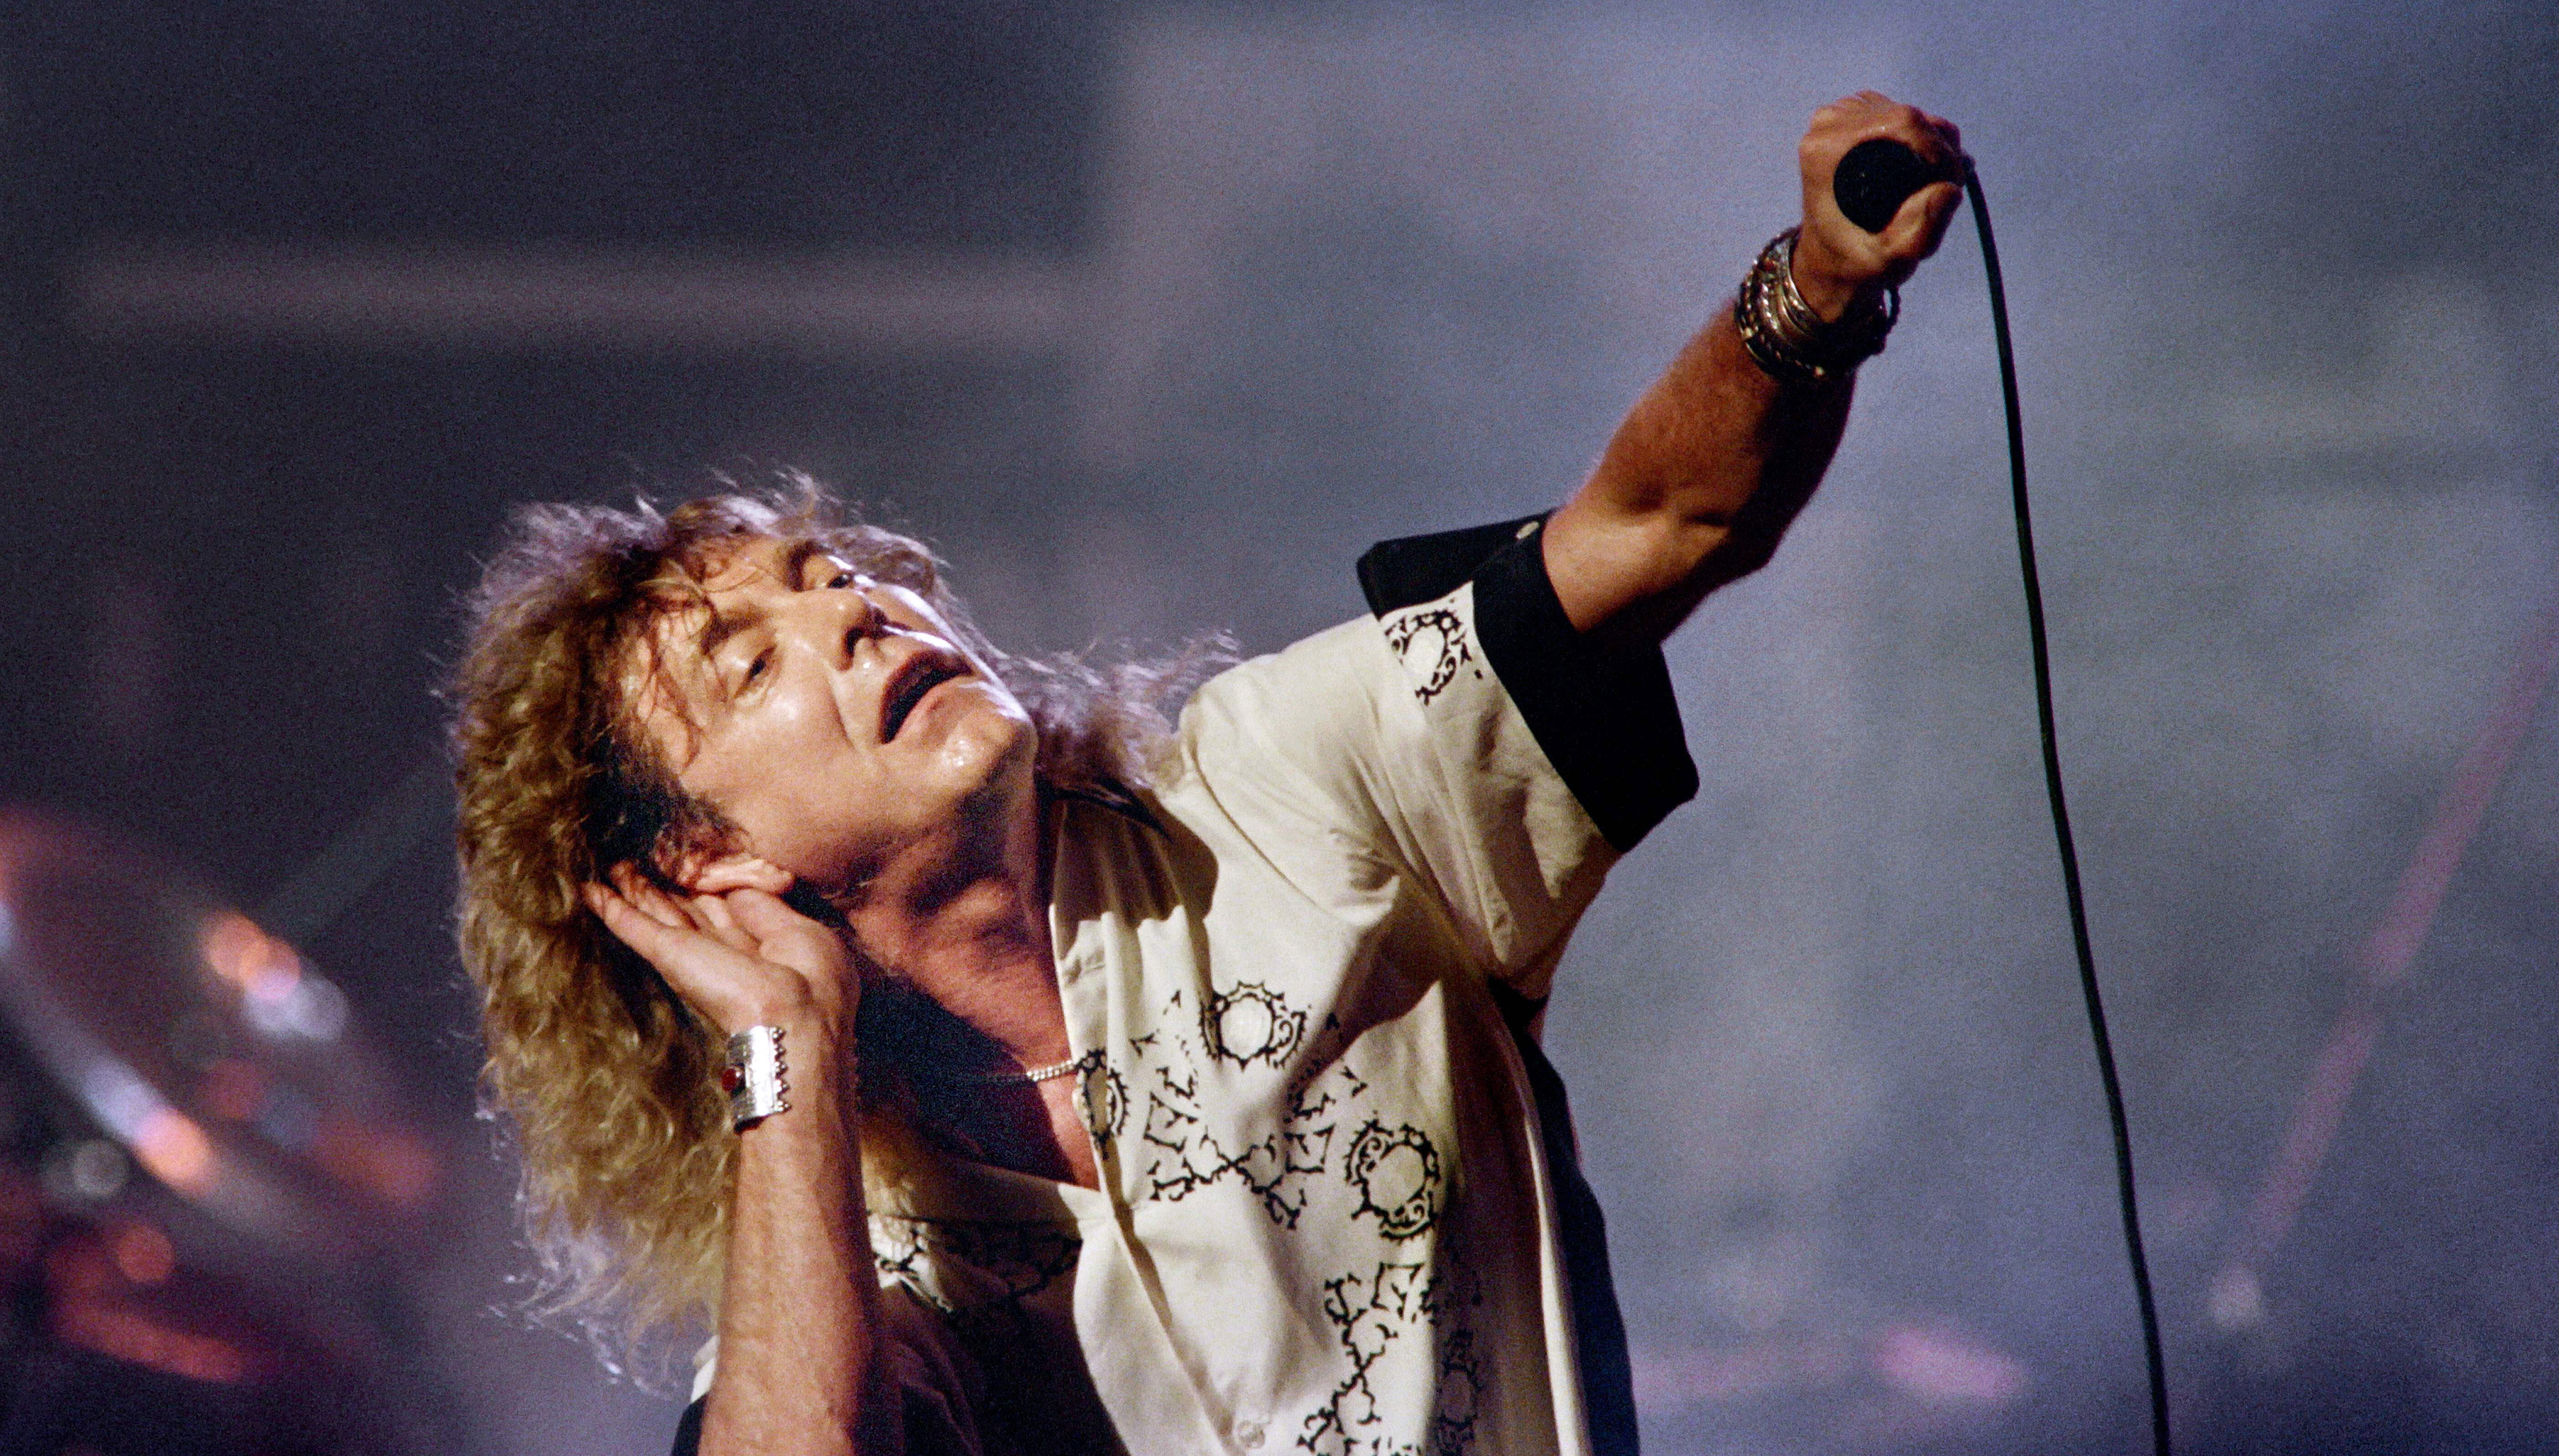 hår subtropisk Rute Robert Plant Never Envisioned Making An Album Without Led Zeppelin | iHeart